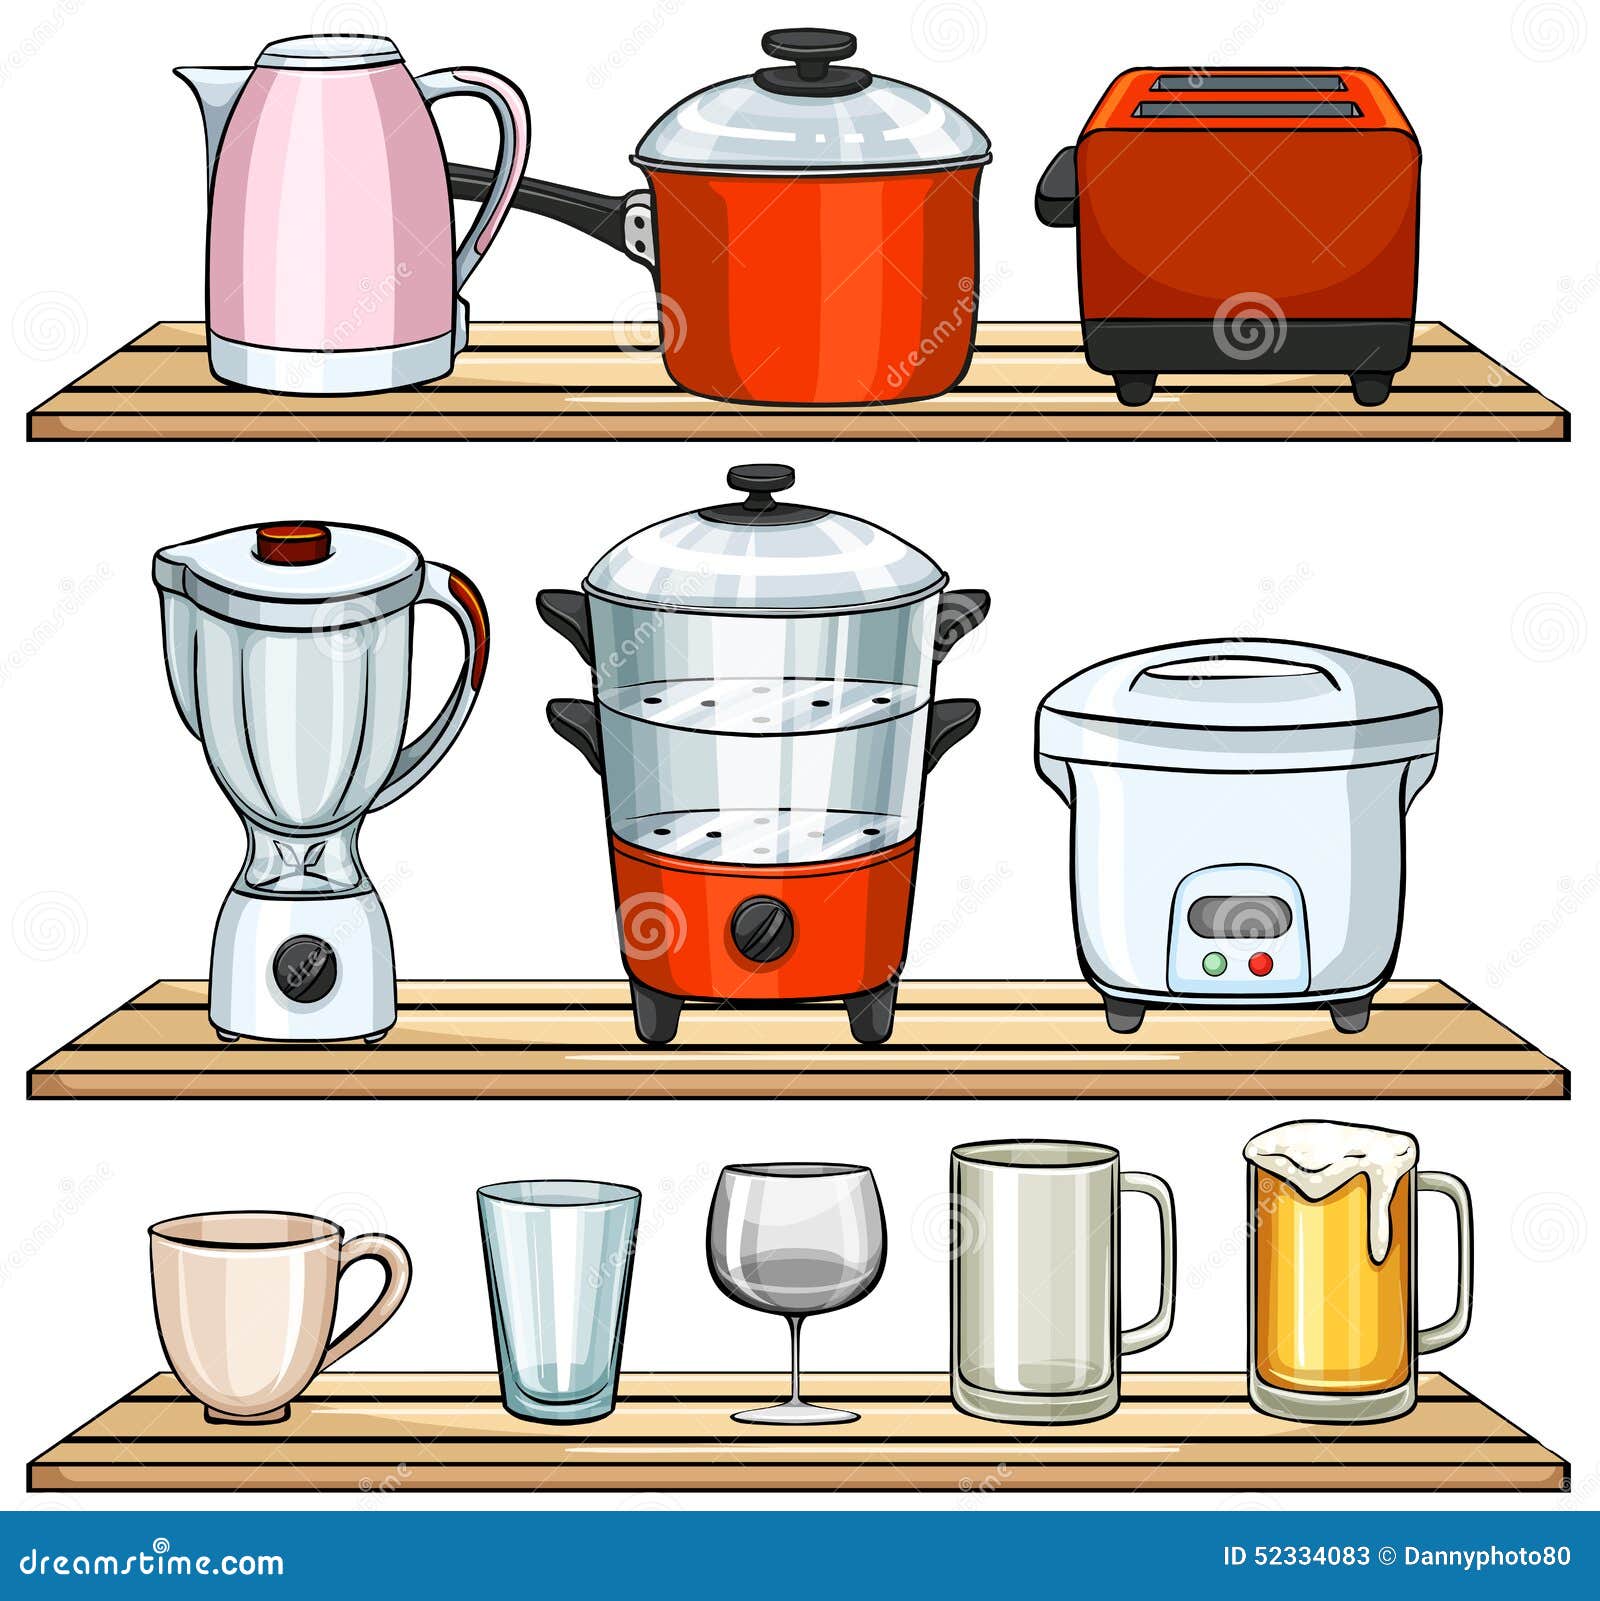 clipart kitchen appliances - photo #8